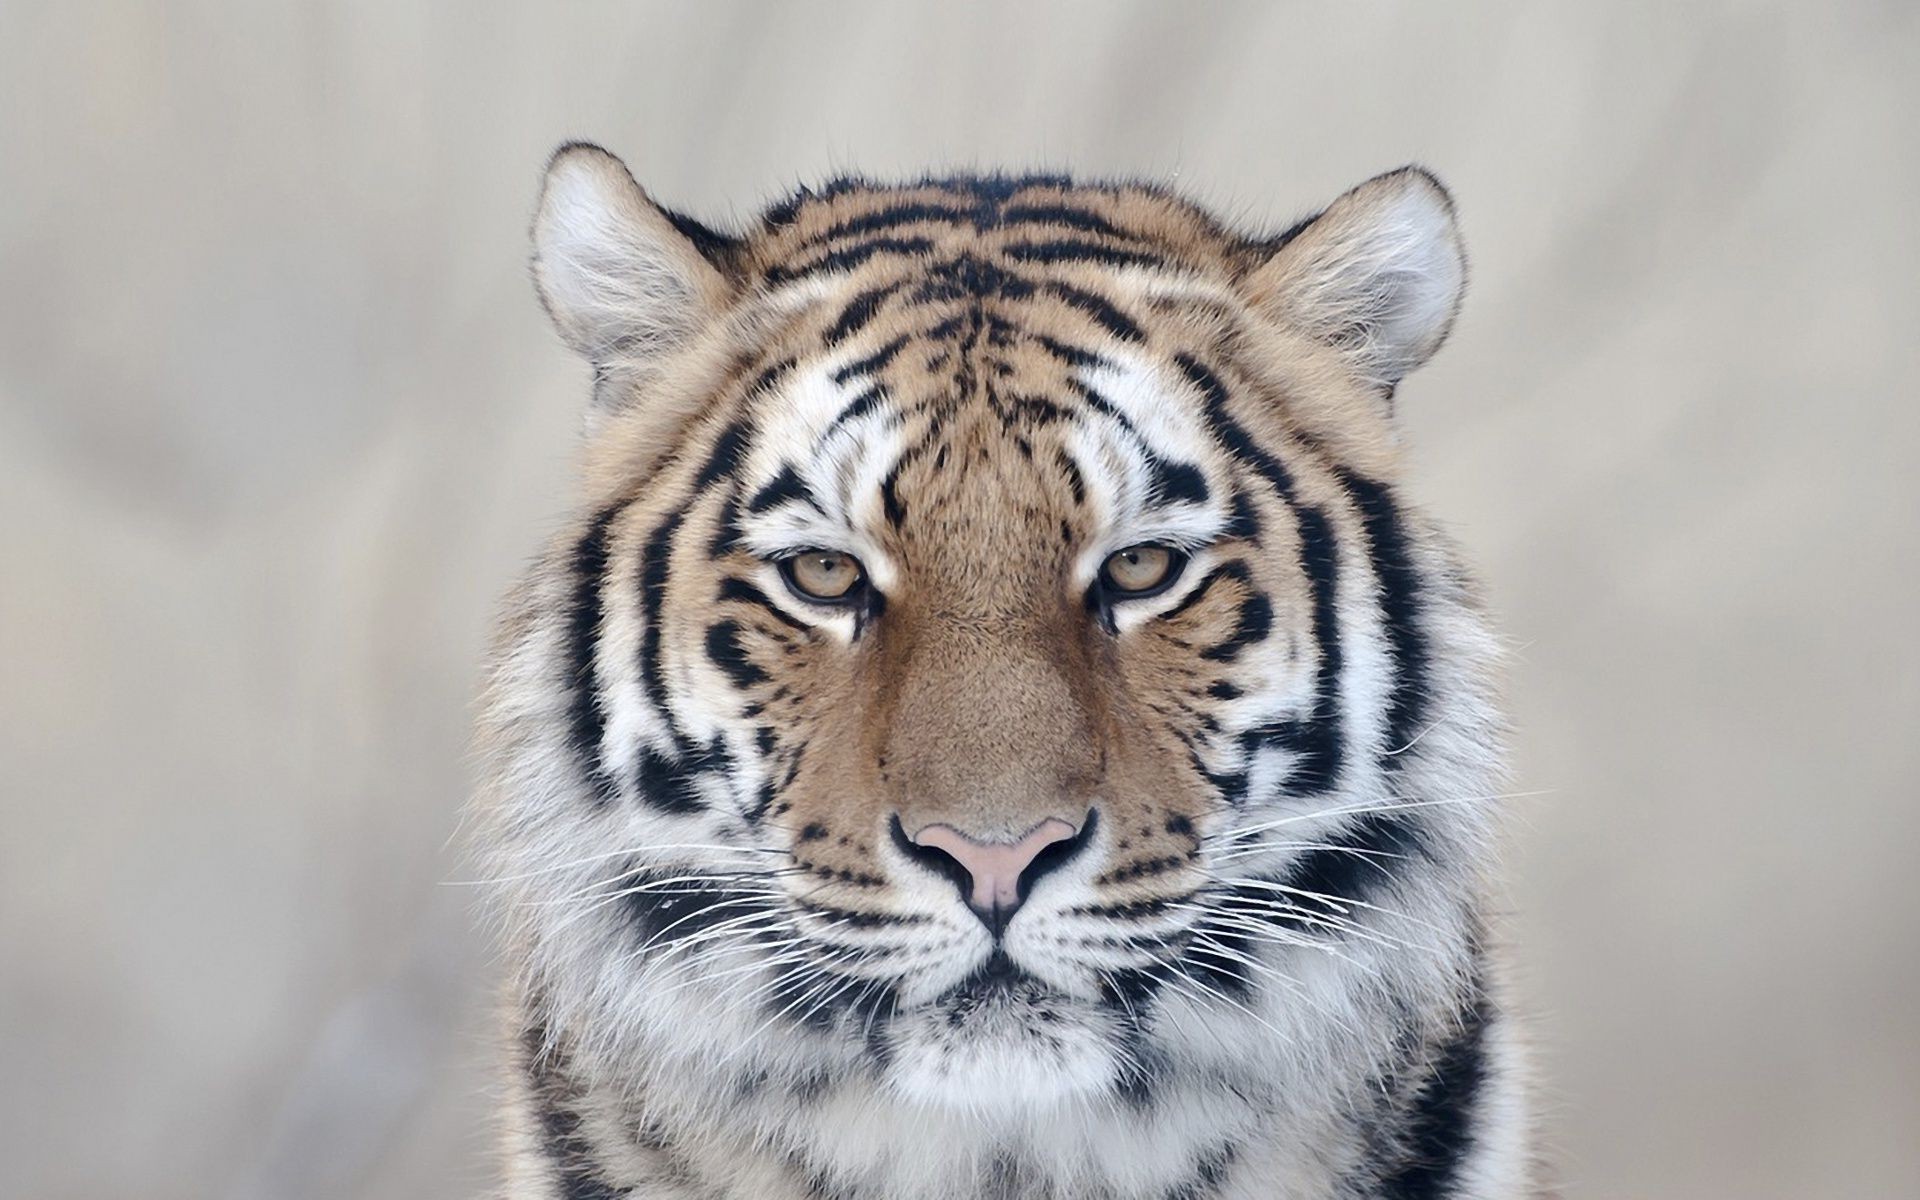 tigers wildlife cat mammal animal predator carnivore tiger hunter zoo stripe wild fur safari portrait